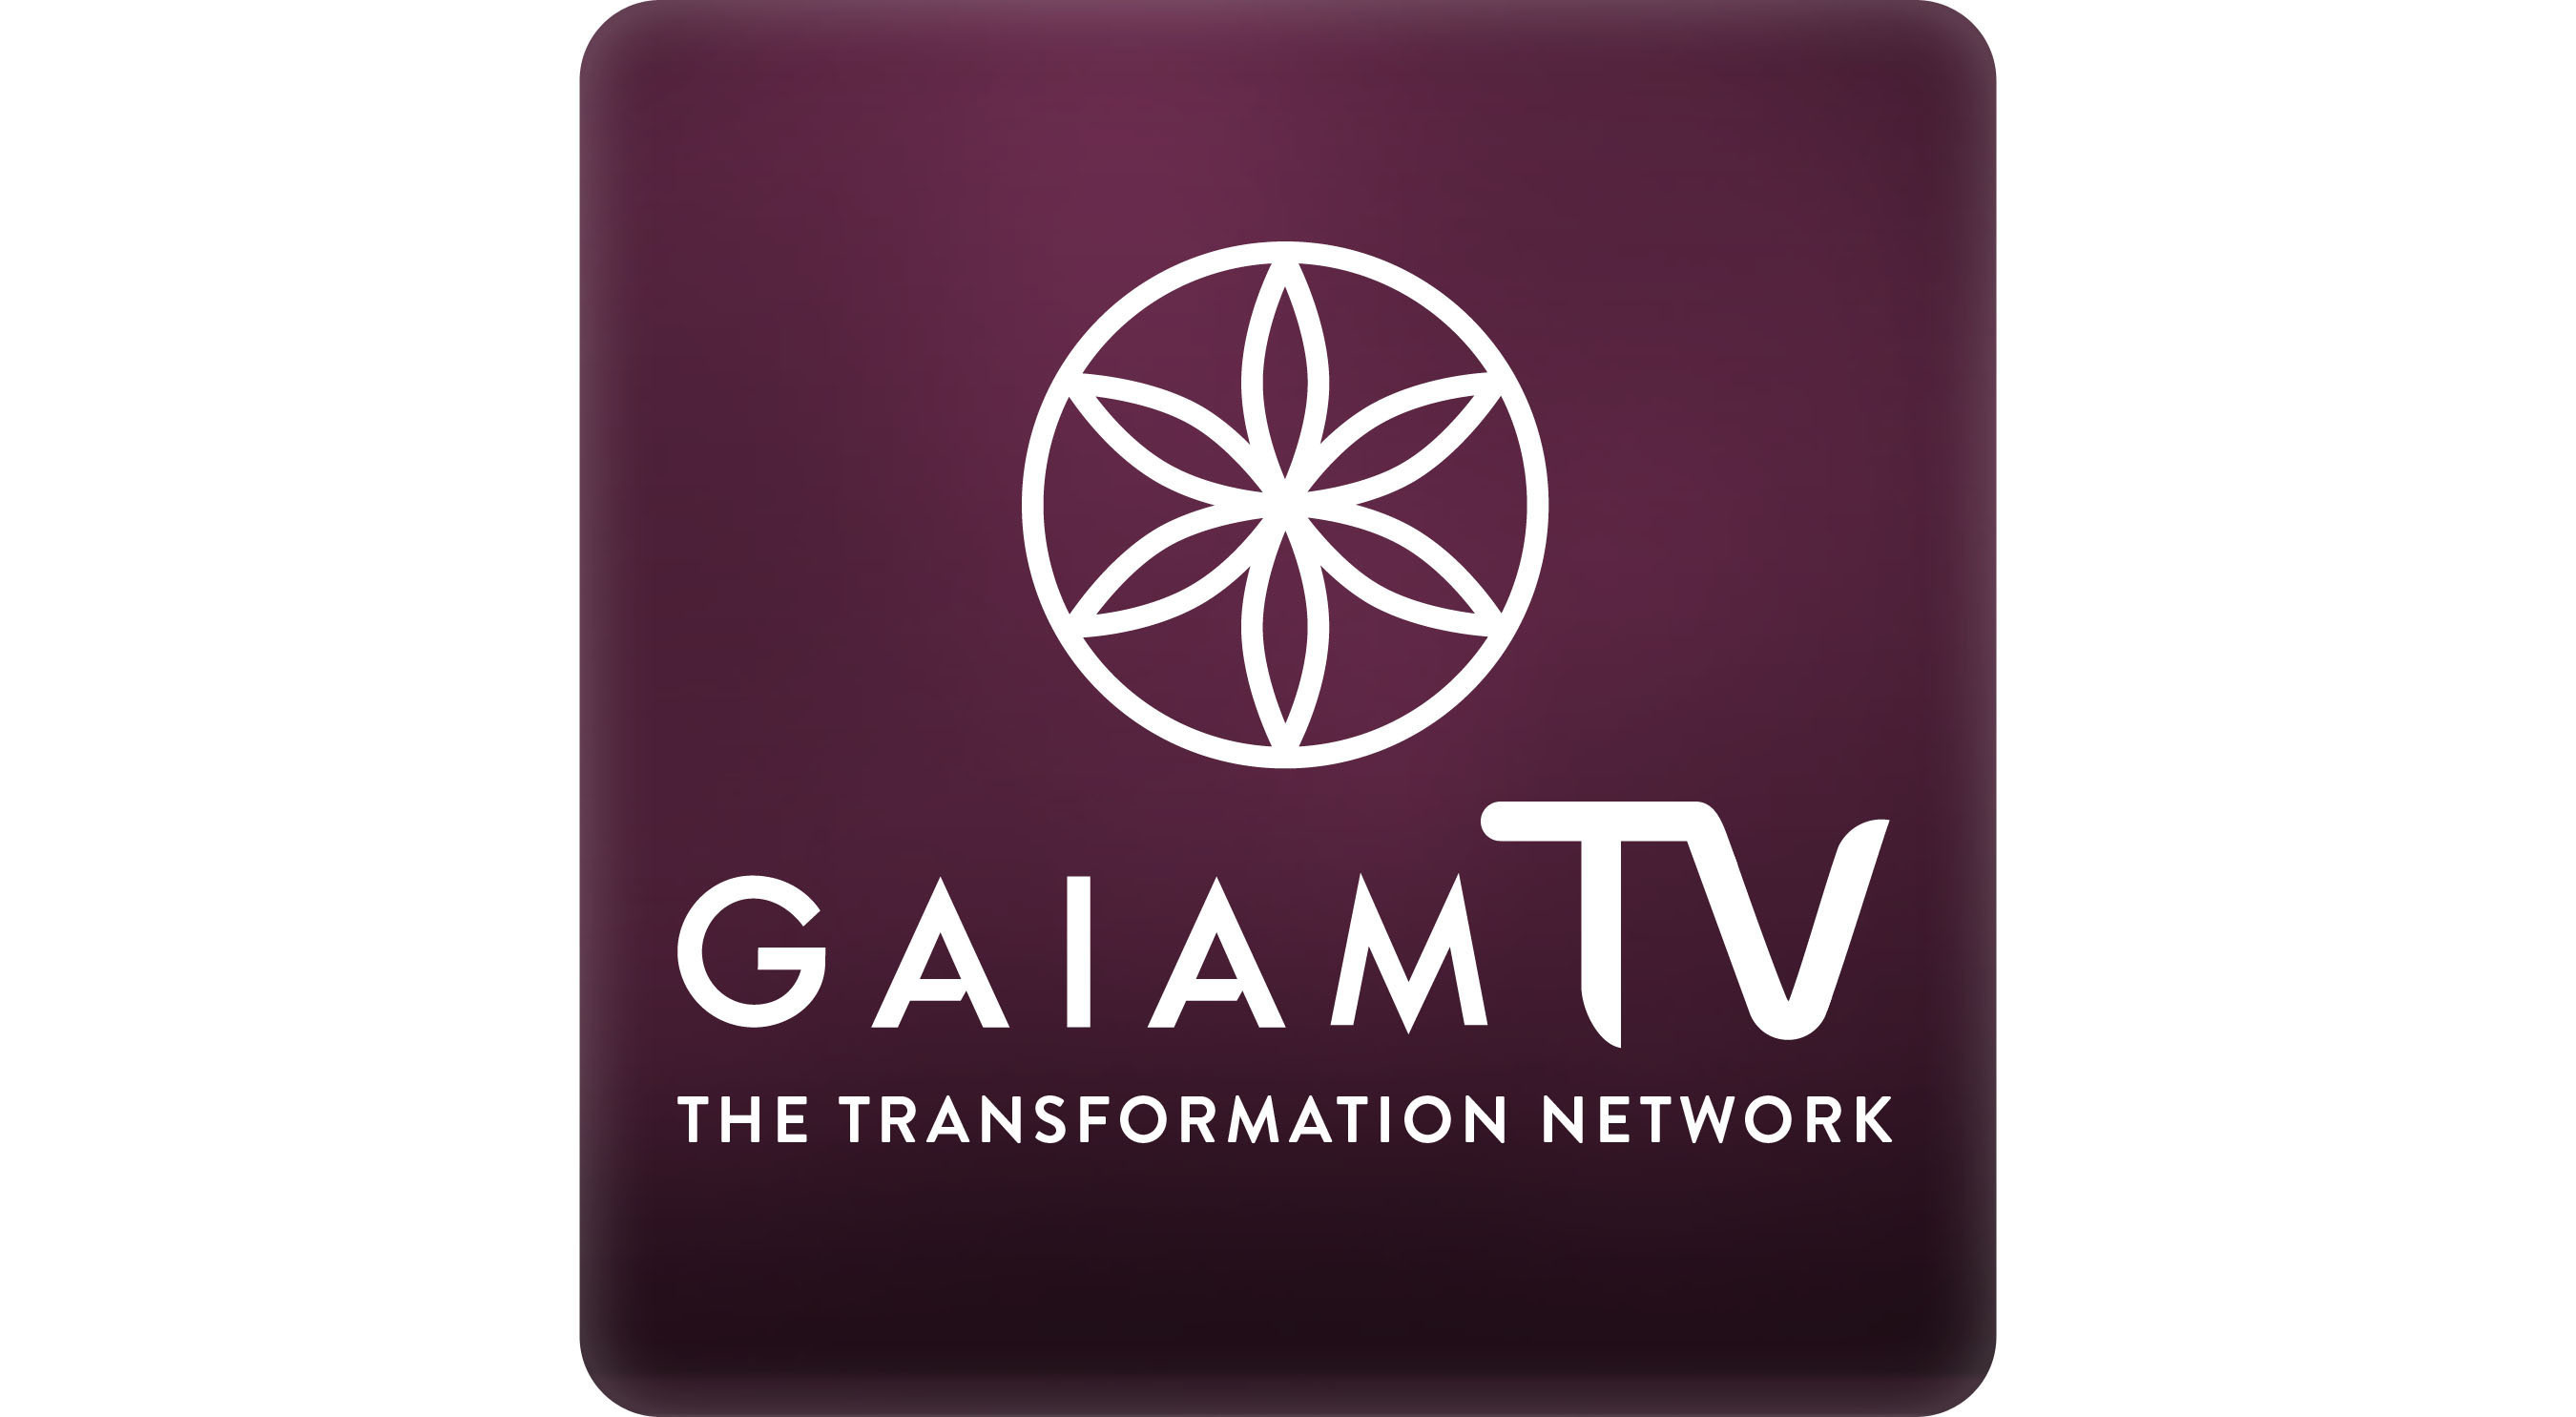 Gaiam TV logo. (PRNewsFoto/Gaiam TV) (PRNewsFoto/GAIAM TV)